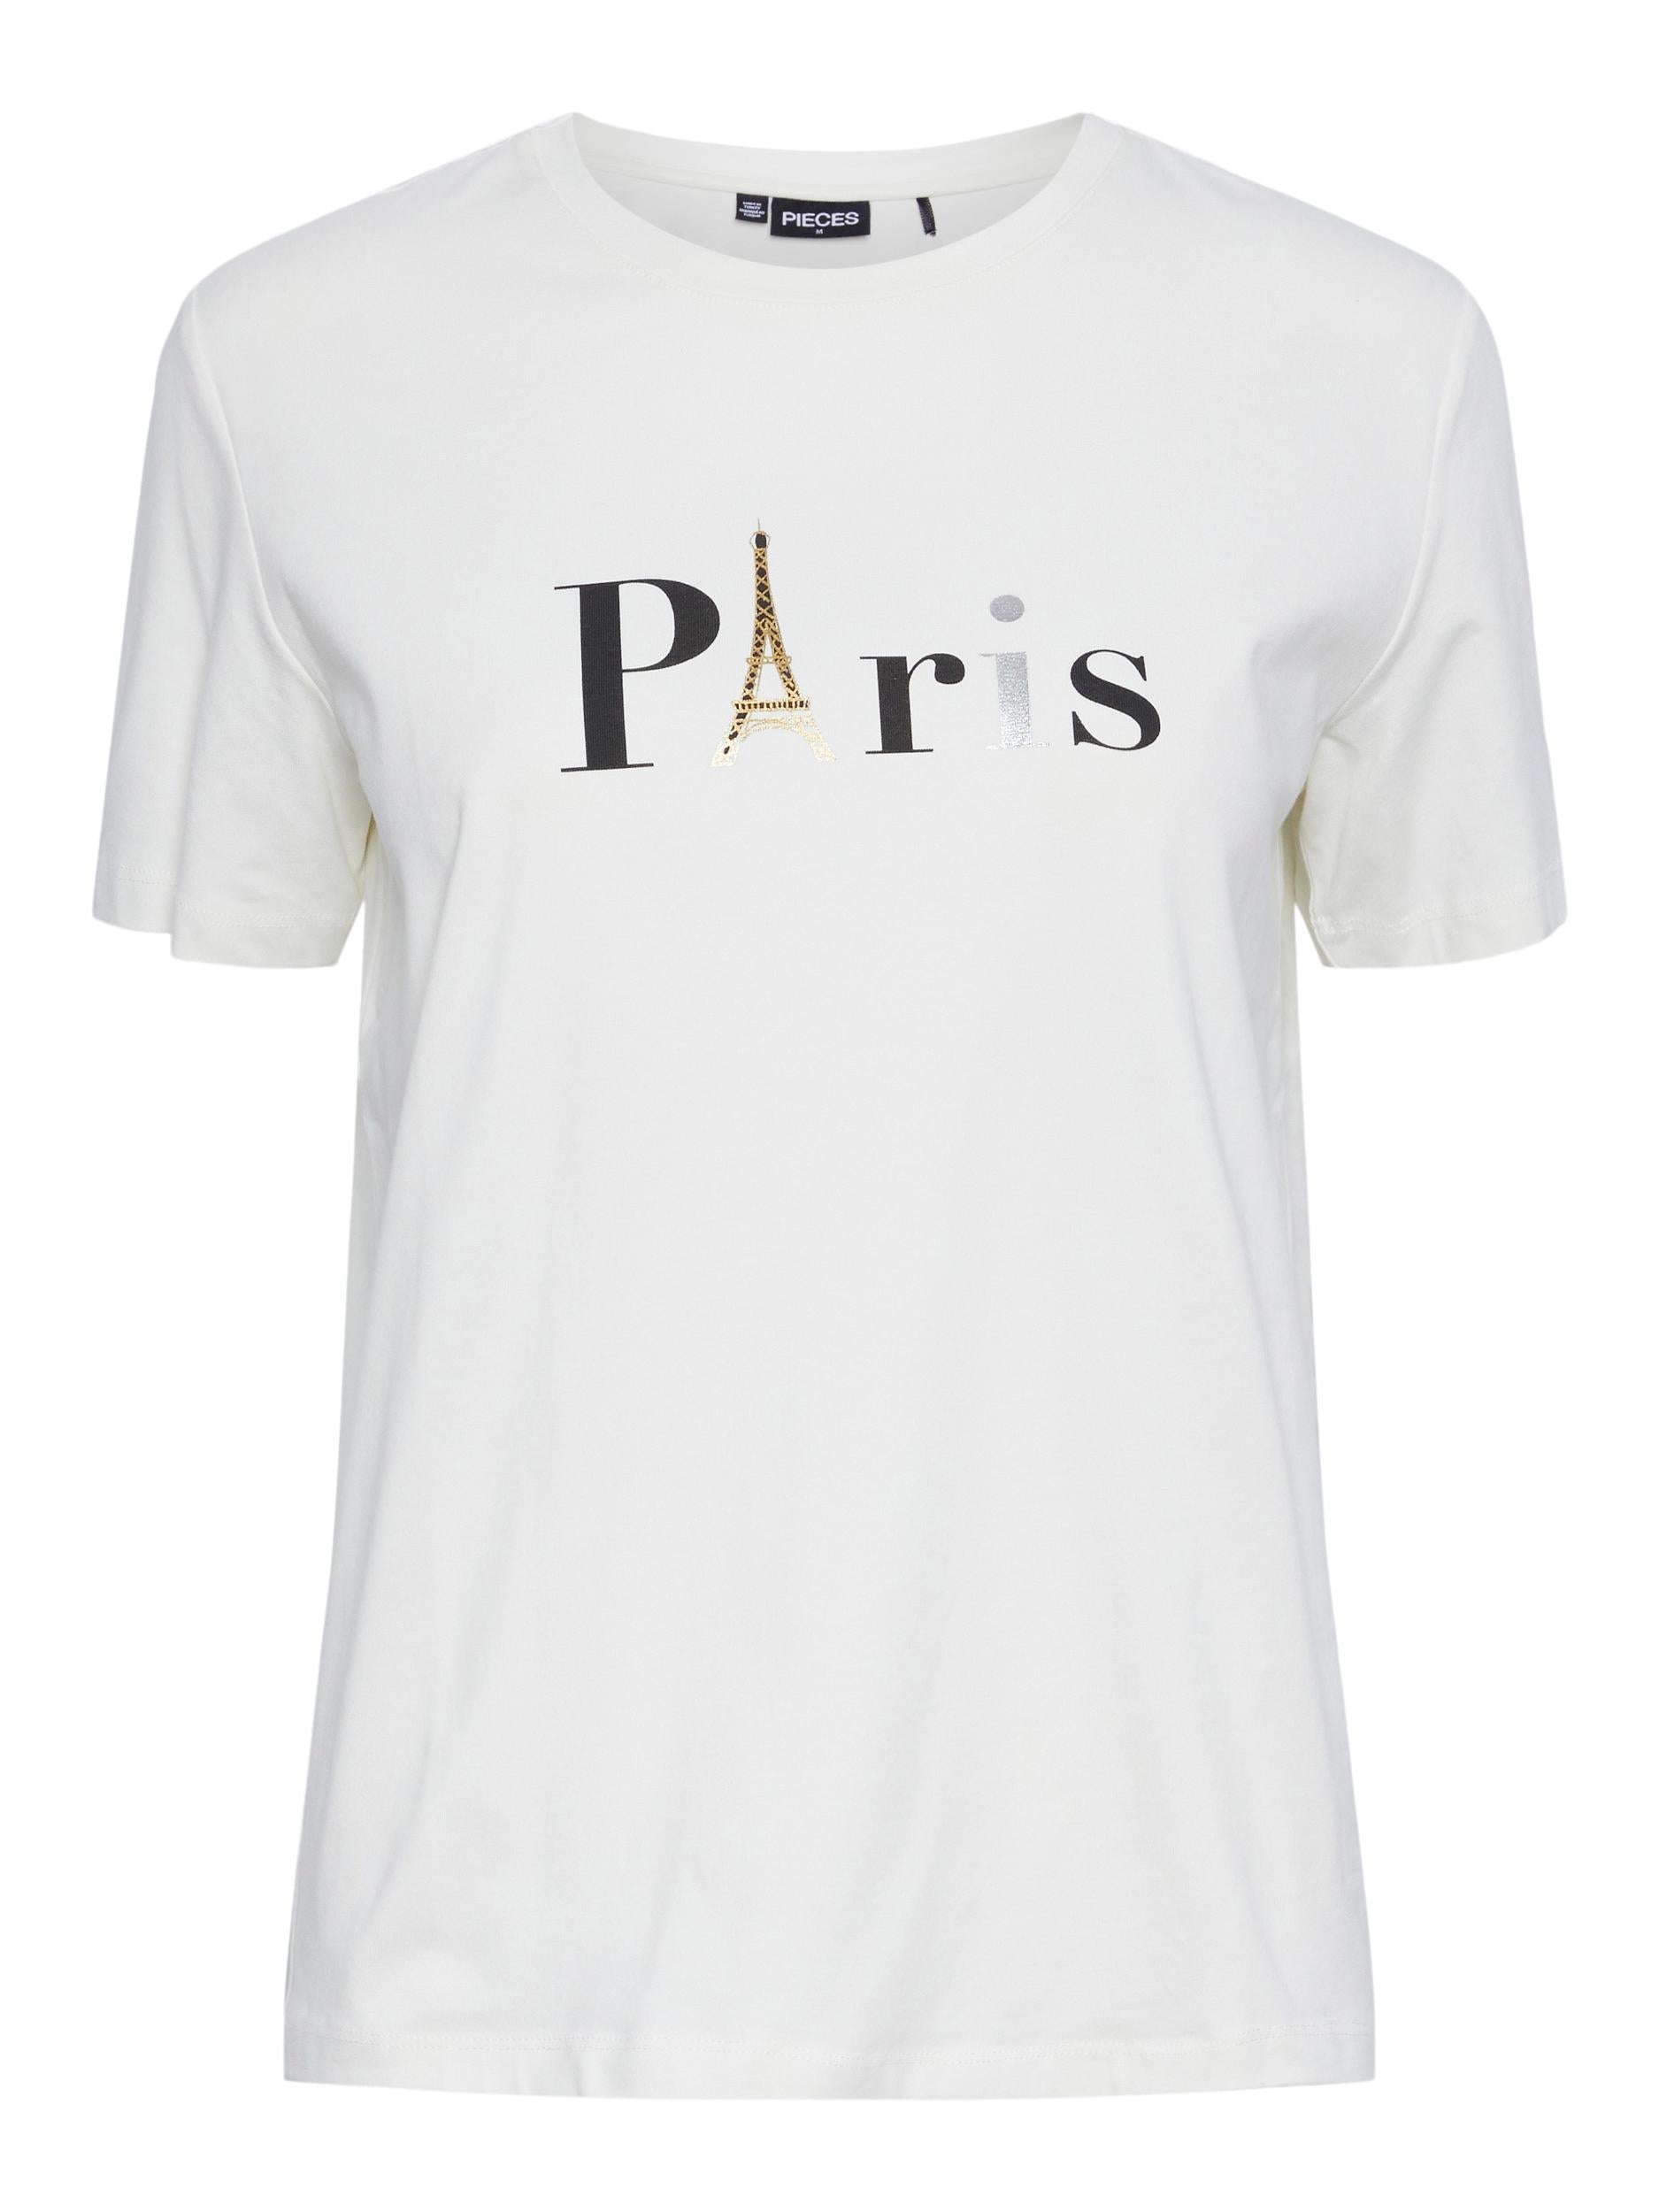 PARIS T-SHIRT (WHITE)